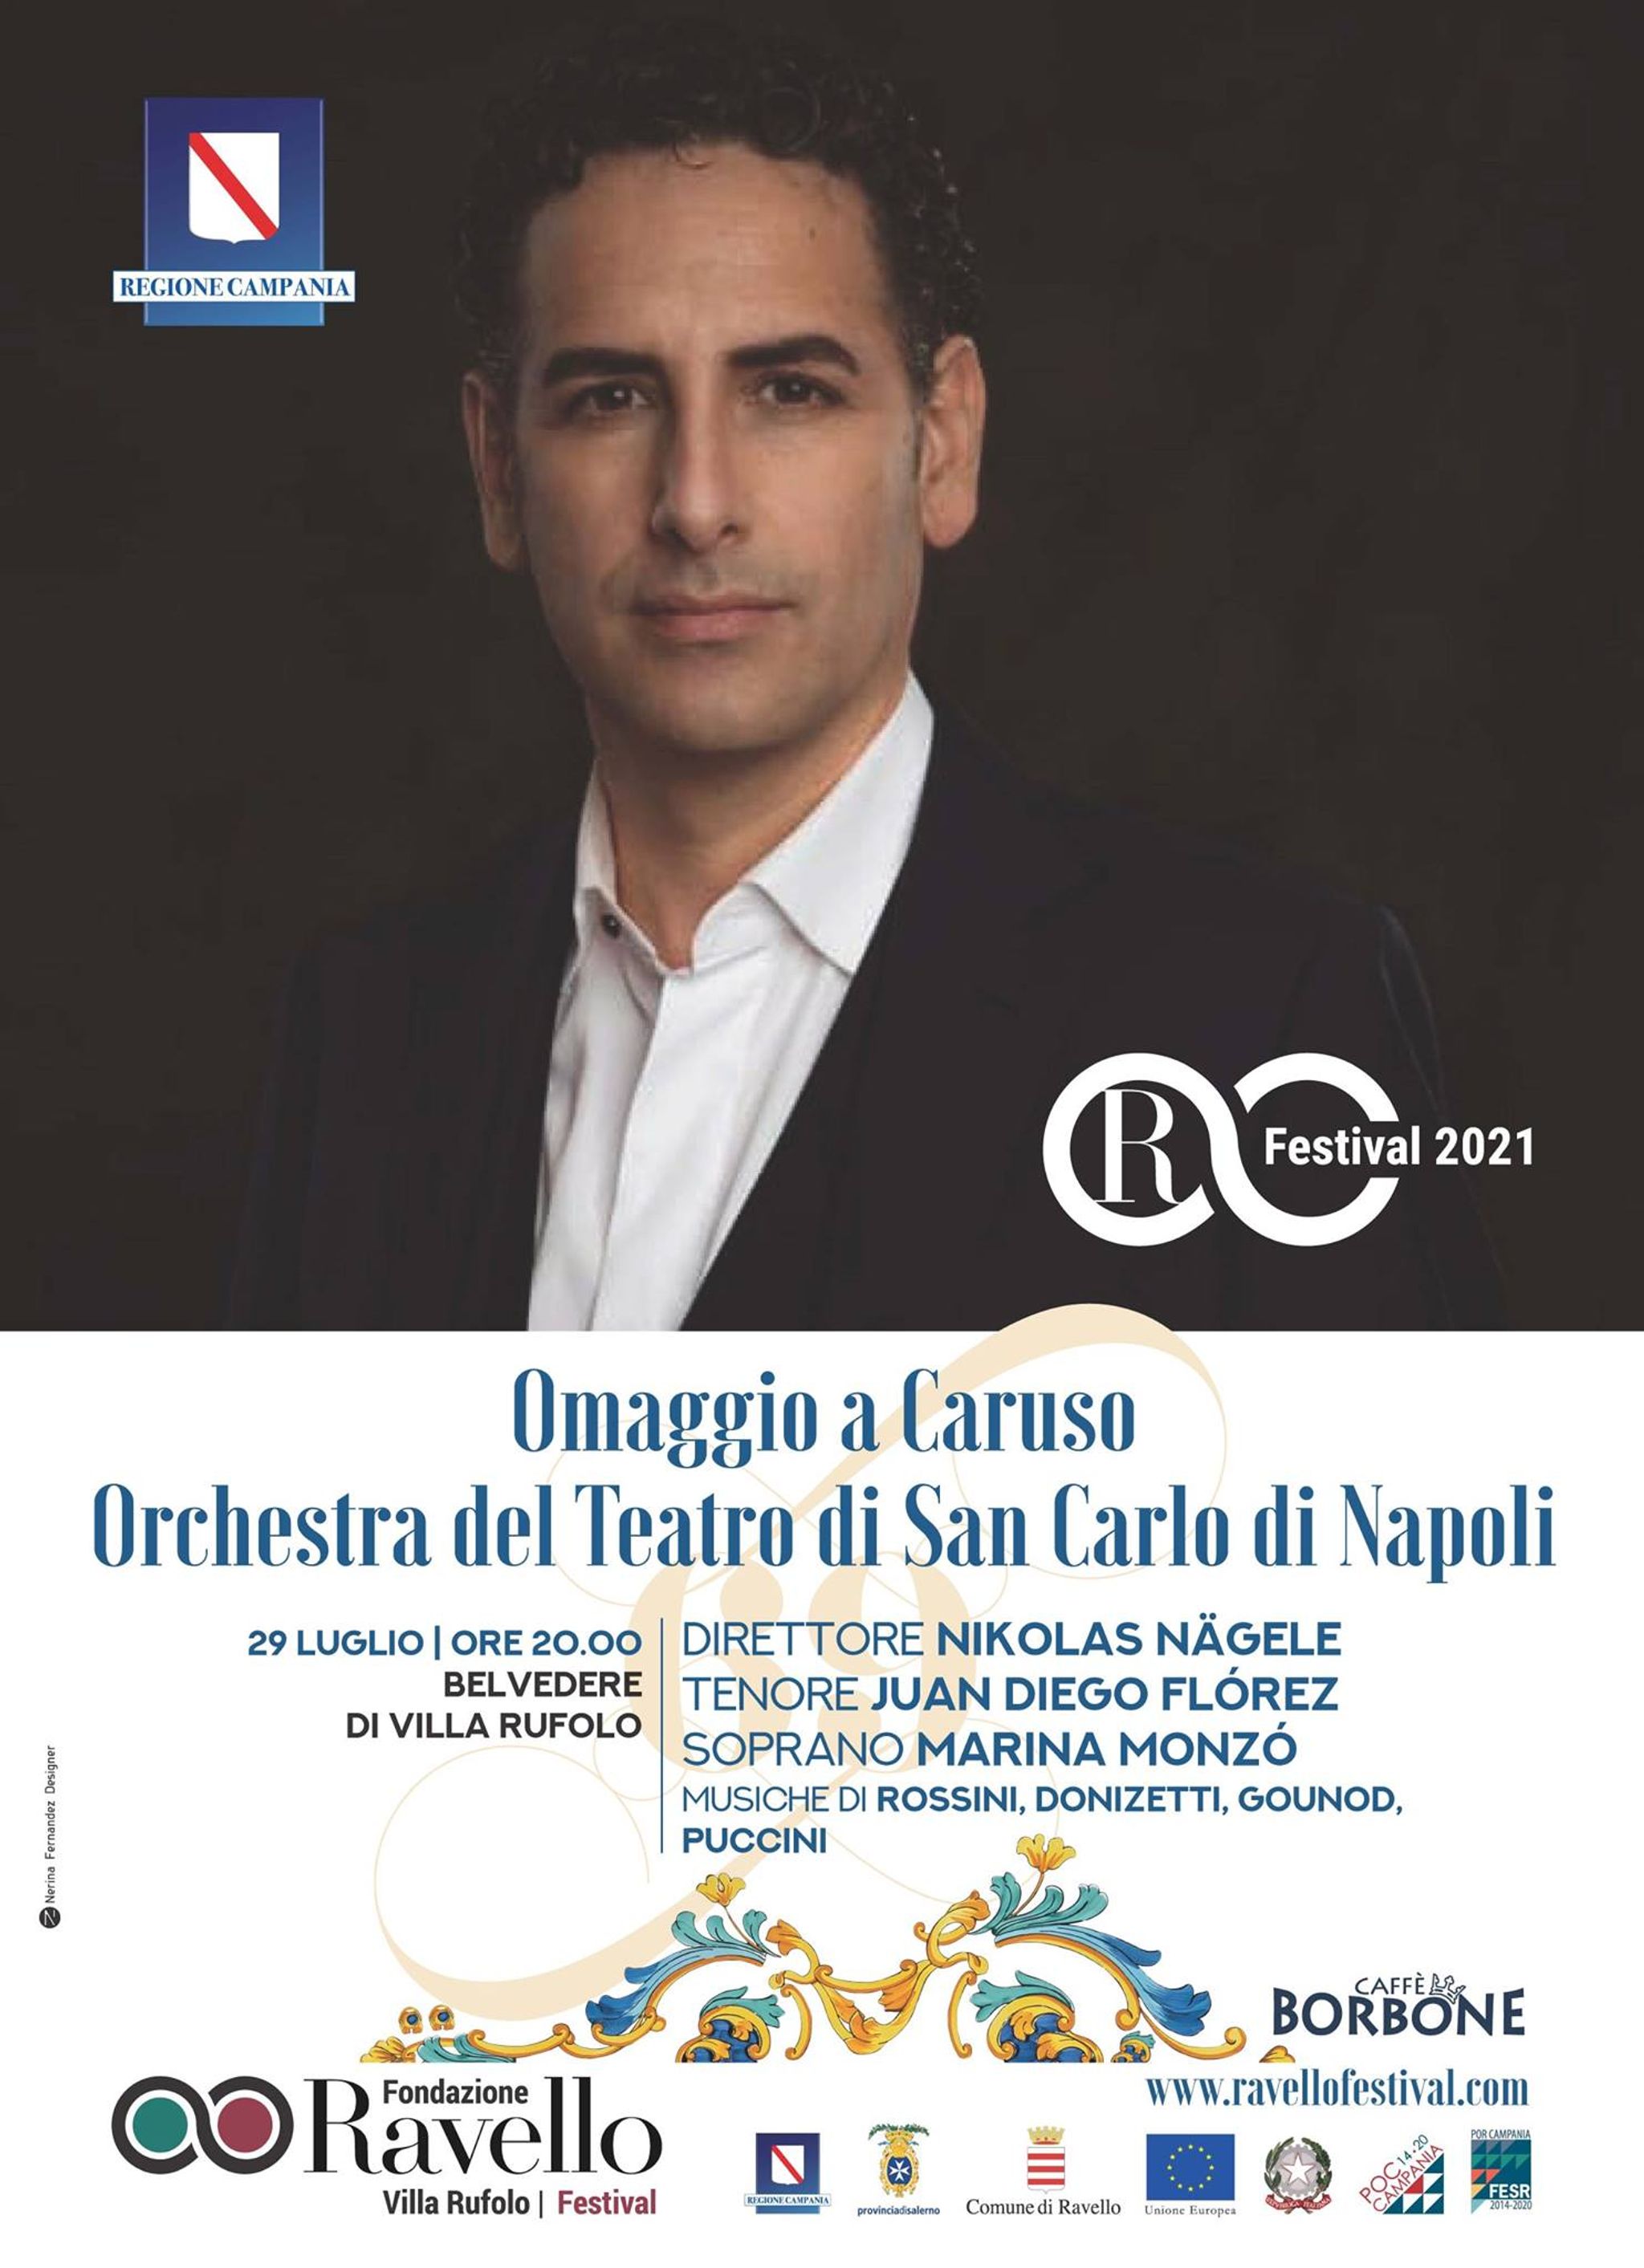 Homage to Caruso: San Carlo Theatre Orchestra of Naples